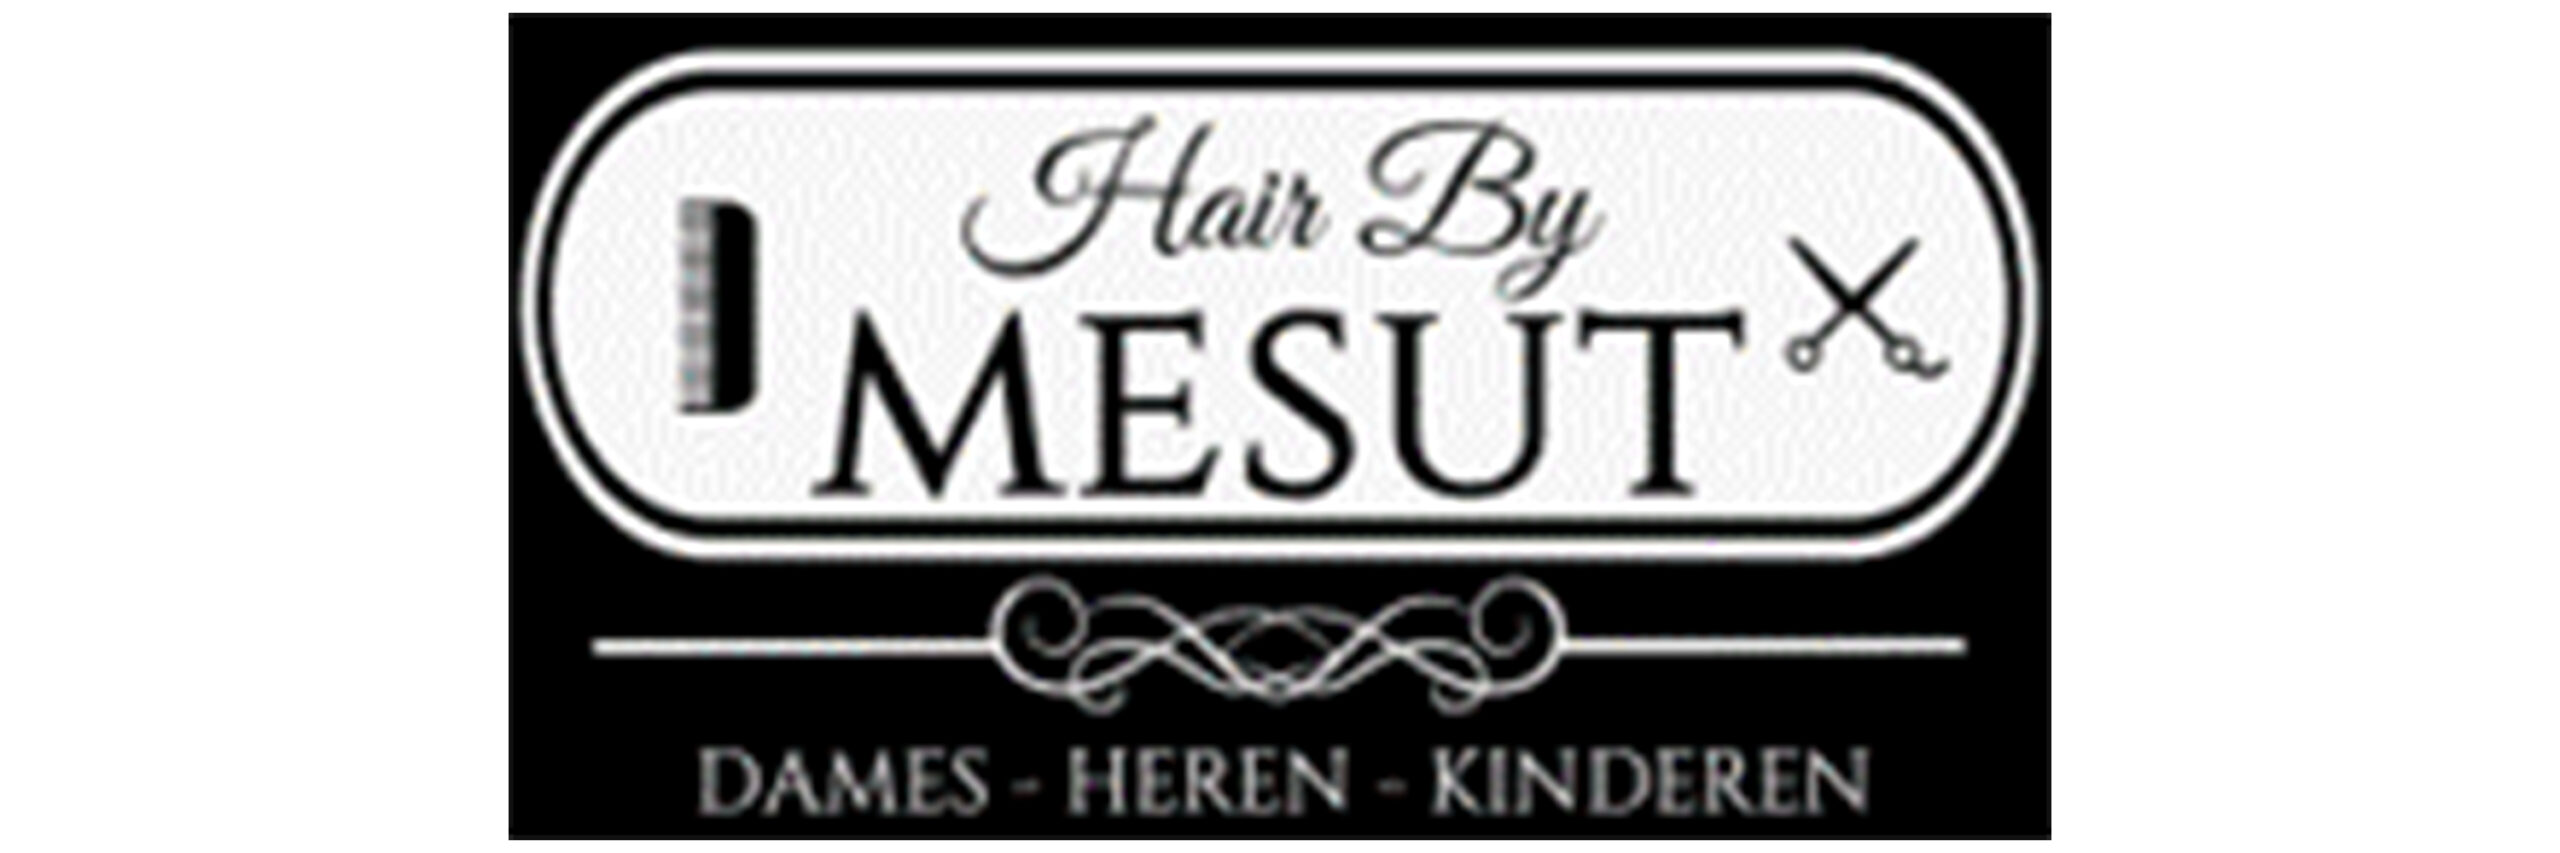 banner_1-3__0012_hair by mesut